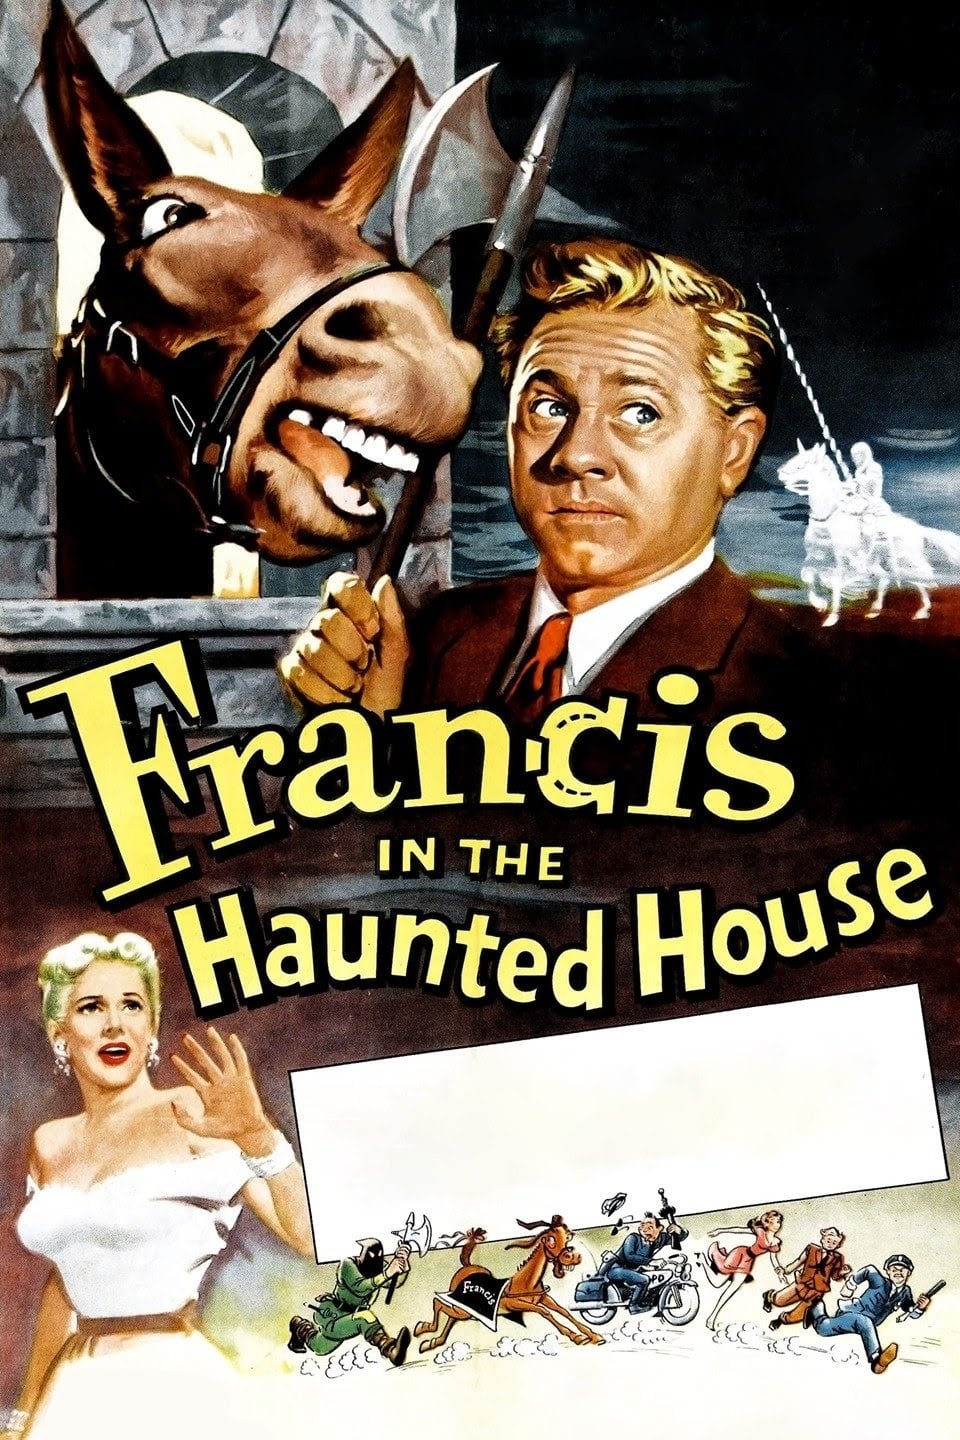 Francis Entre Fantasmas (1956)